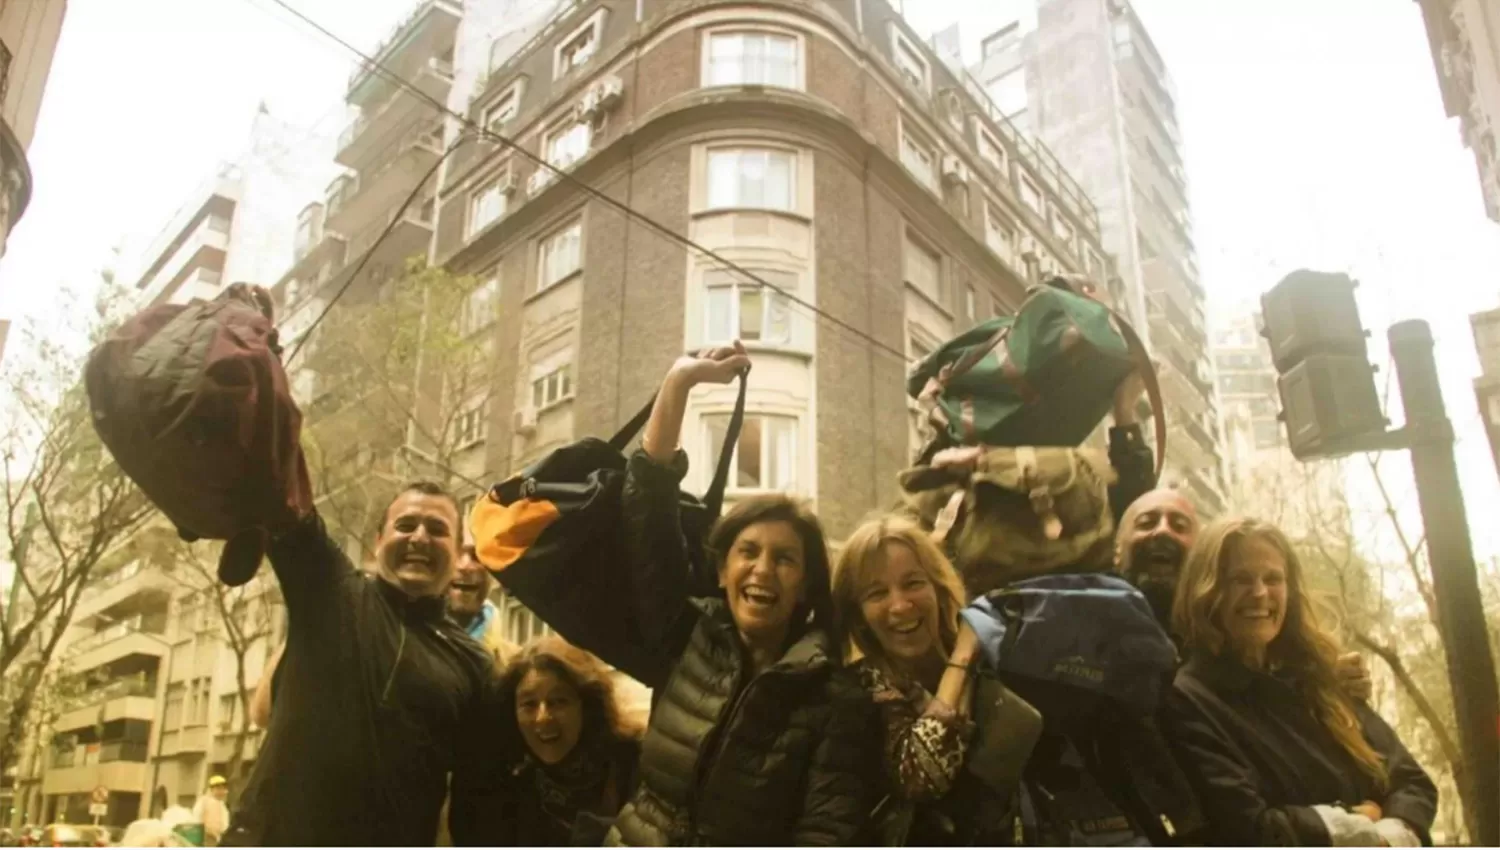 Convocan a una campaña para sacarse una foto con un bolso frente al departamento de Cristina Kirchner